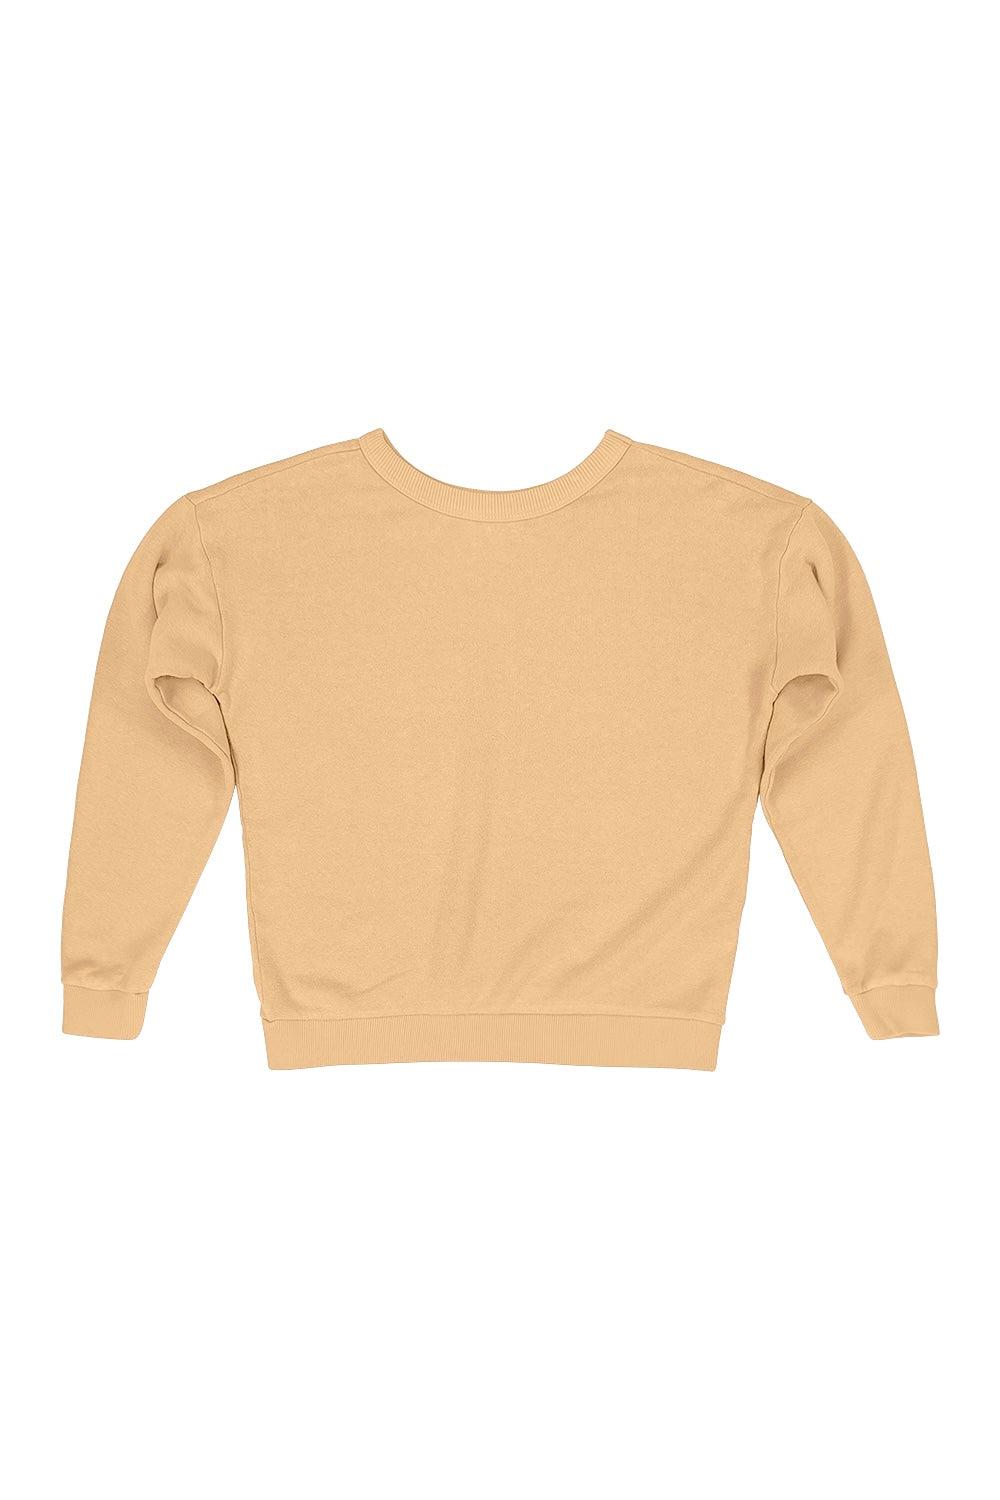 Crux Cropped Sweatshirt | Jungmaven Hemp Clothing & Accessories / Color: Oat Milk